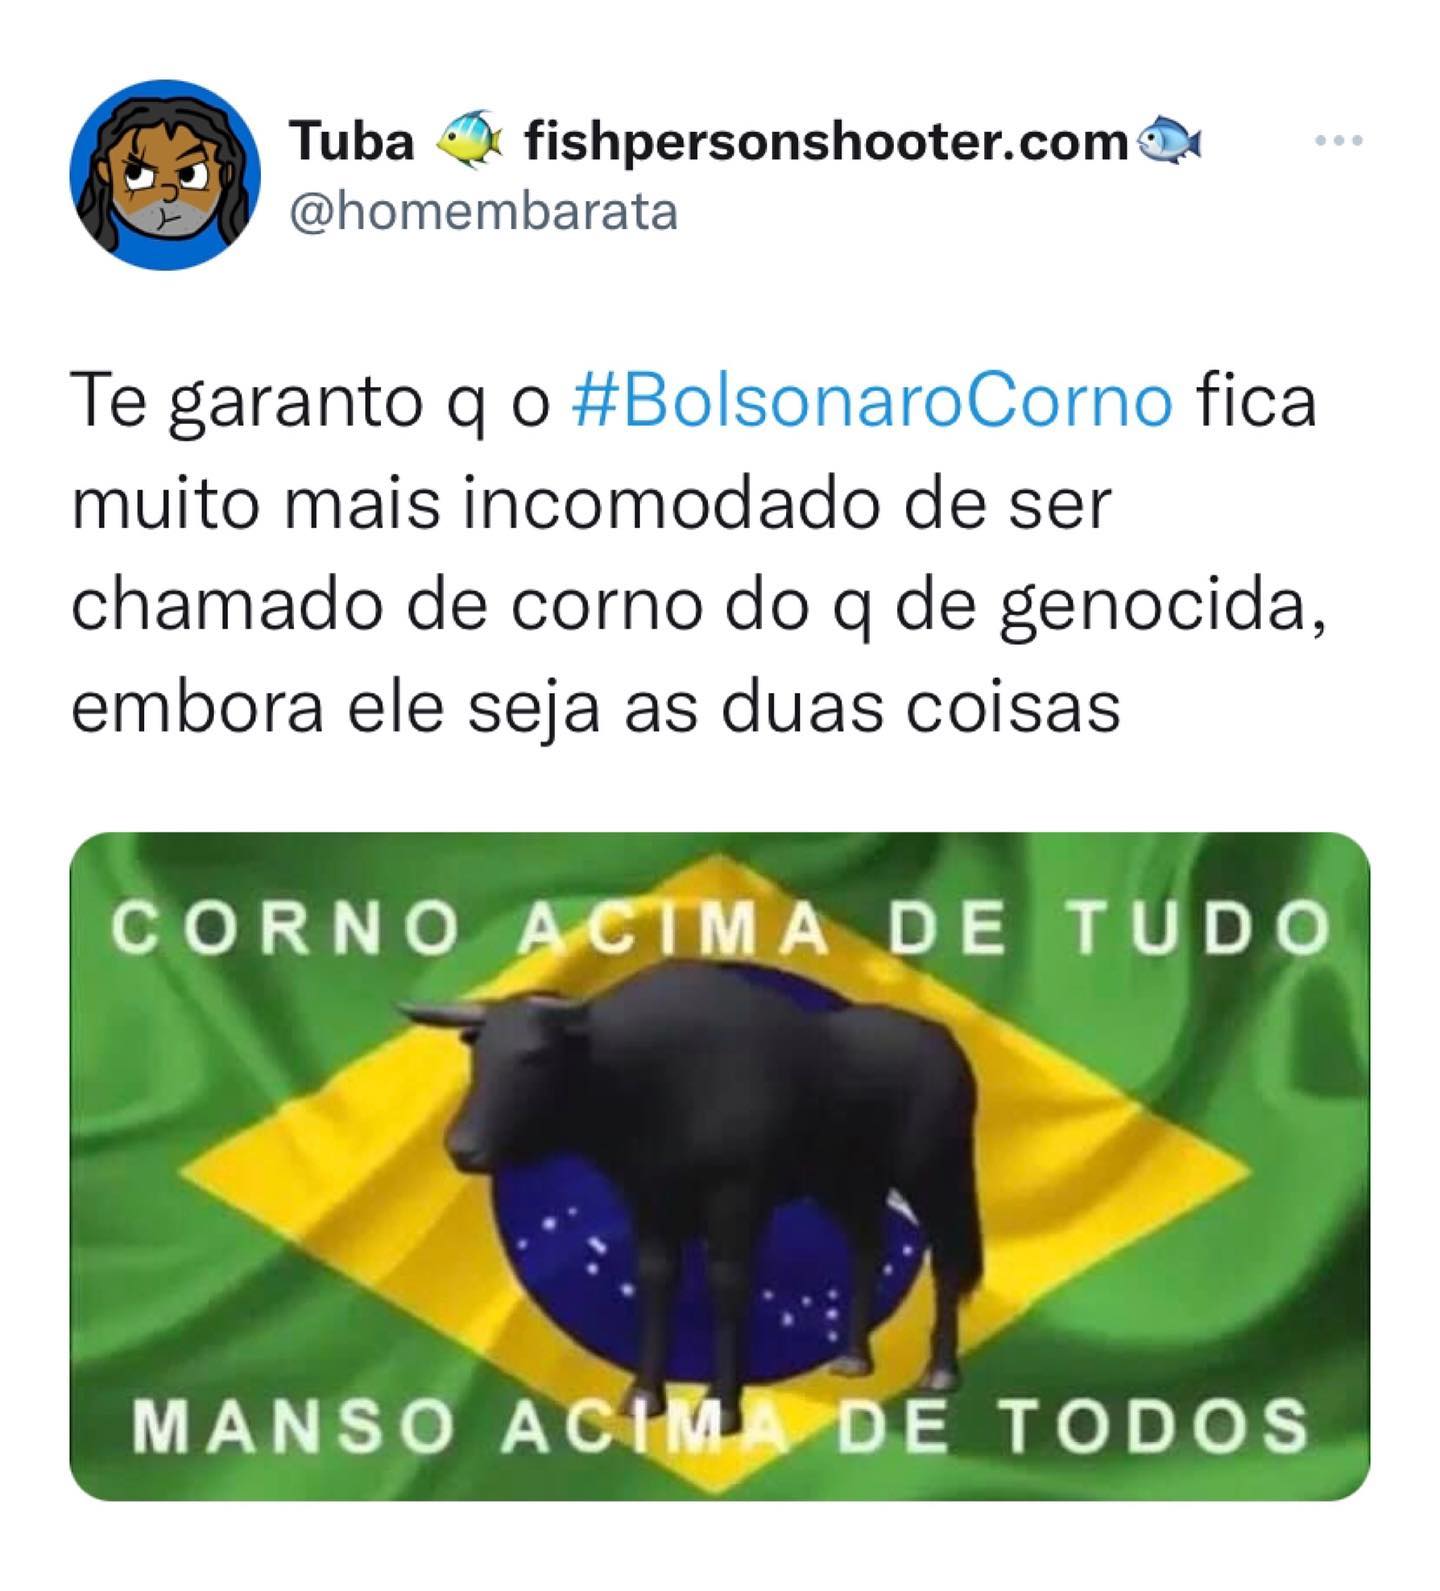 Nosso slogan do Gov Bolsonaro: CORNO ACIMA DE TUDO, MANSO ACIMA DE TODOS! #BolsonaroCorno